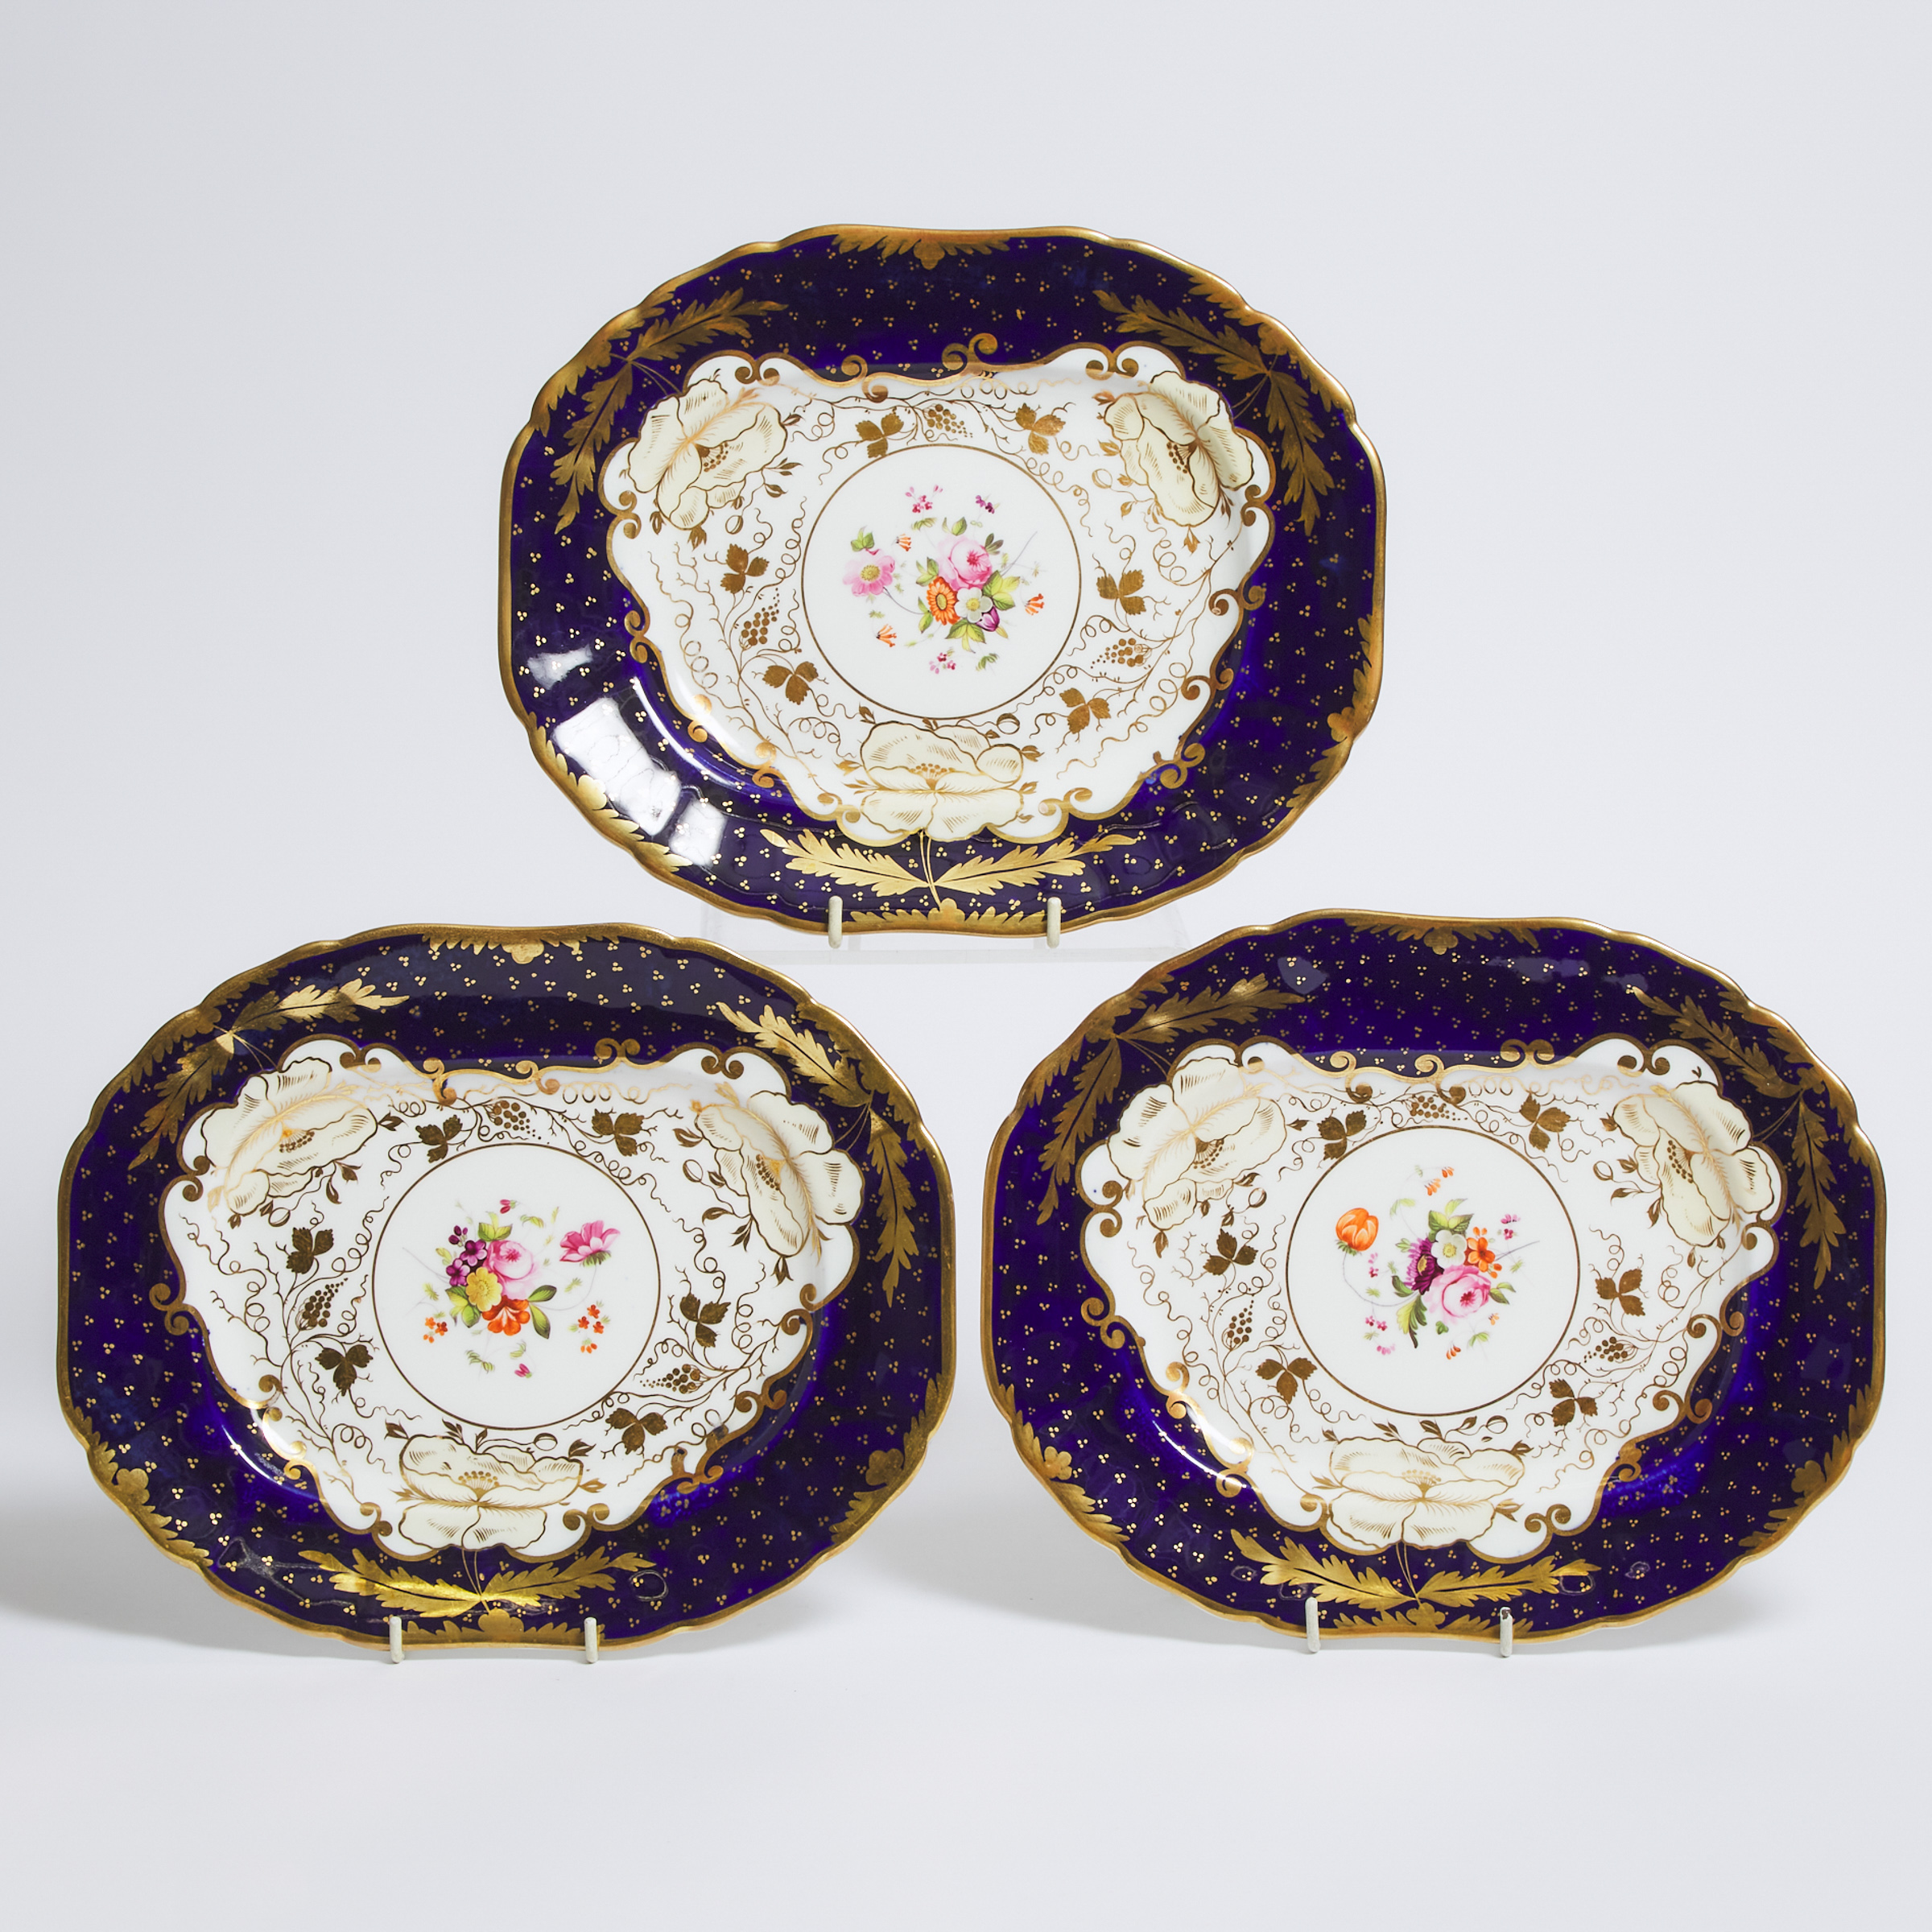 Three English Porcelain Oval Dishes, c.1830-40